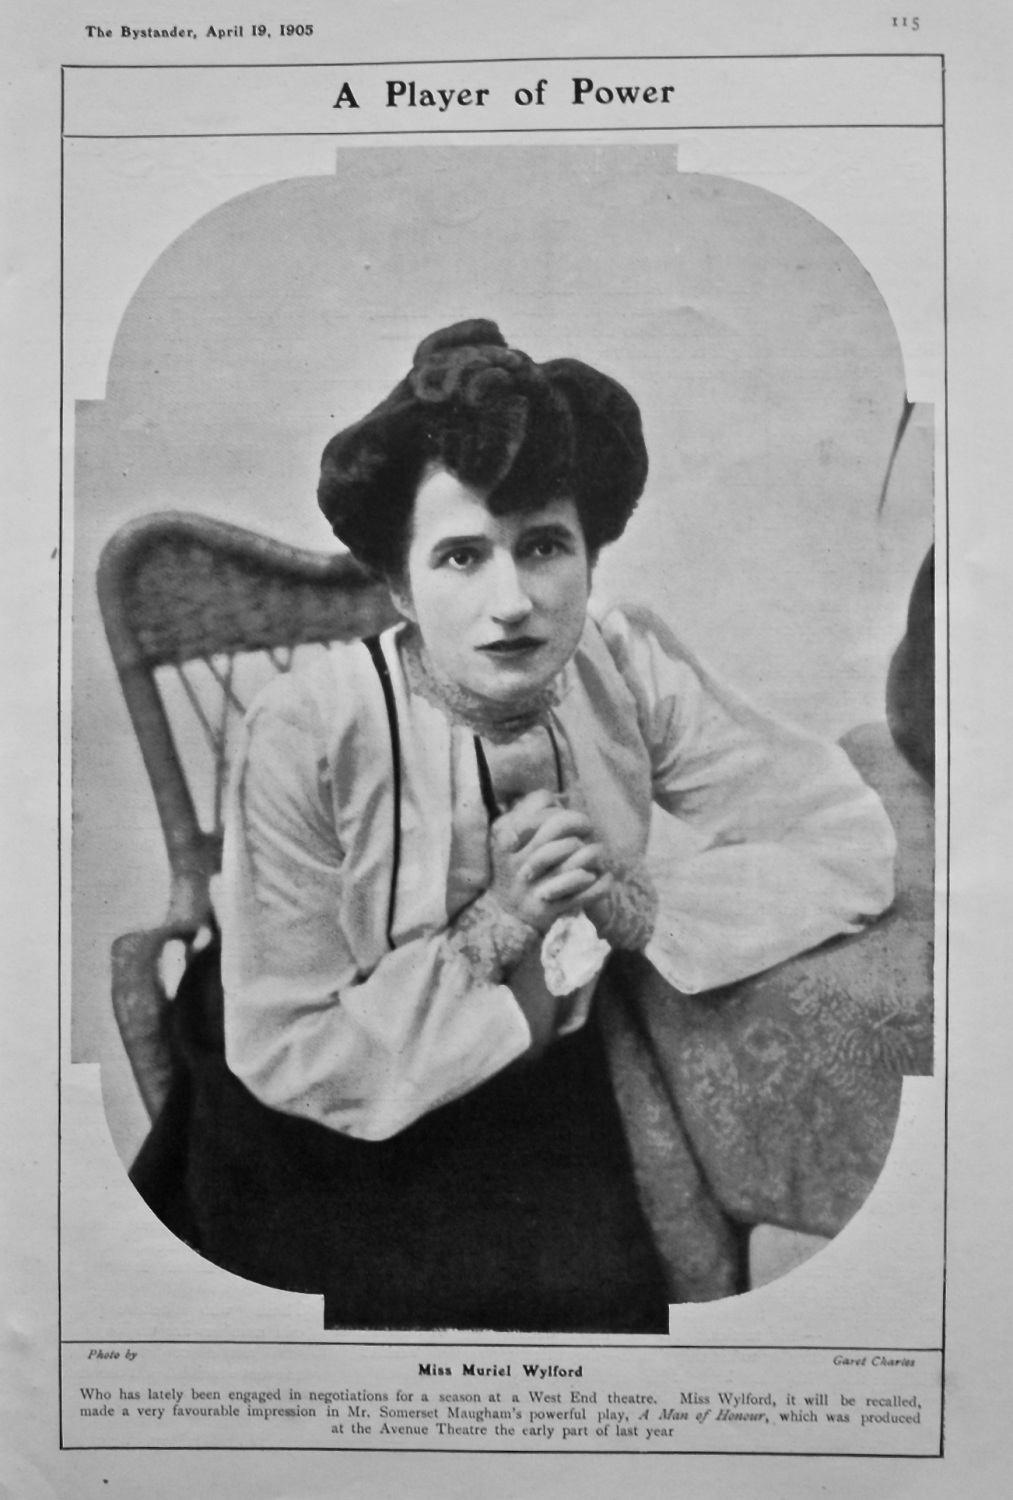 Miss Muriel Wylford. 1905.